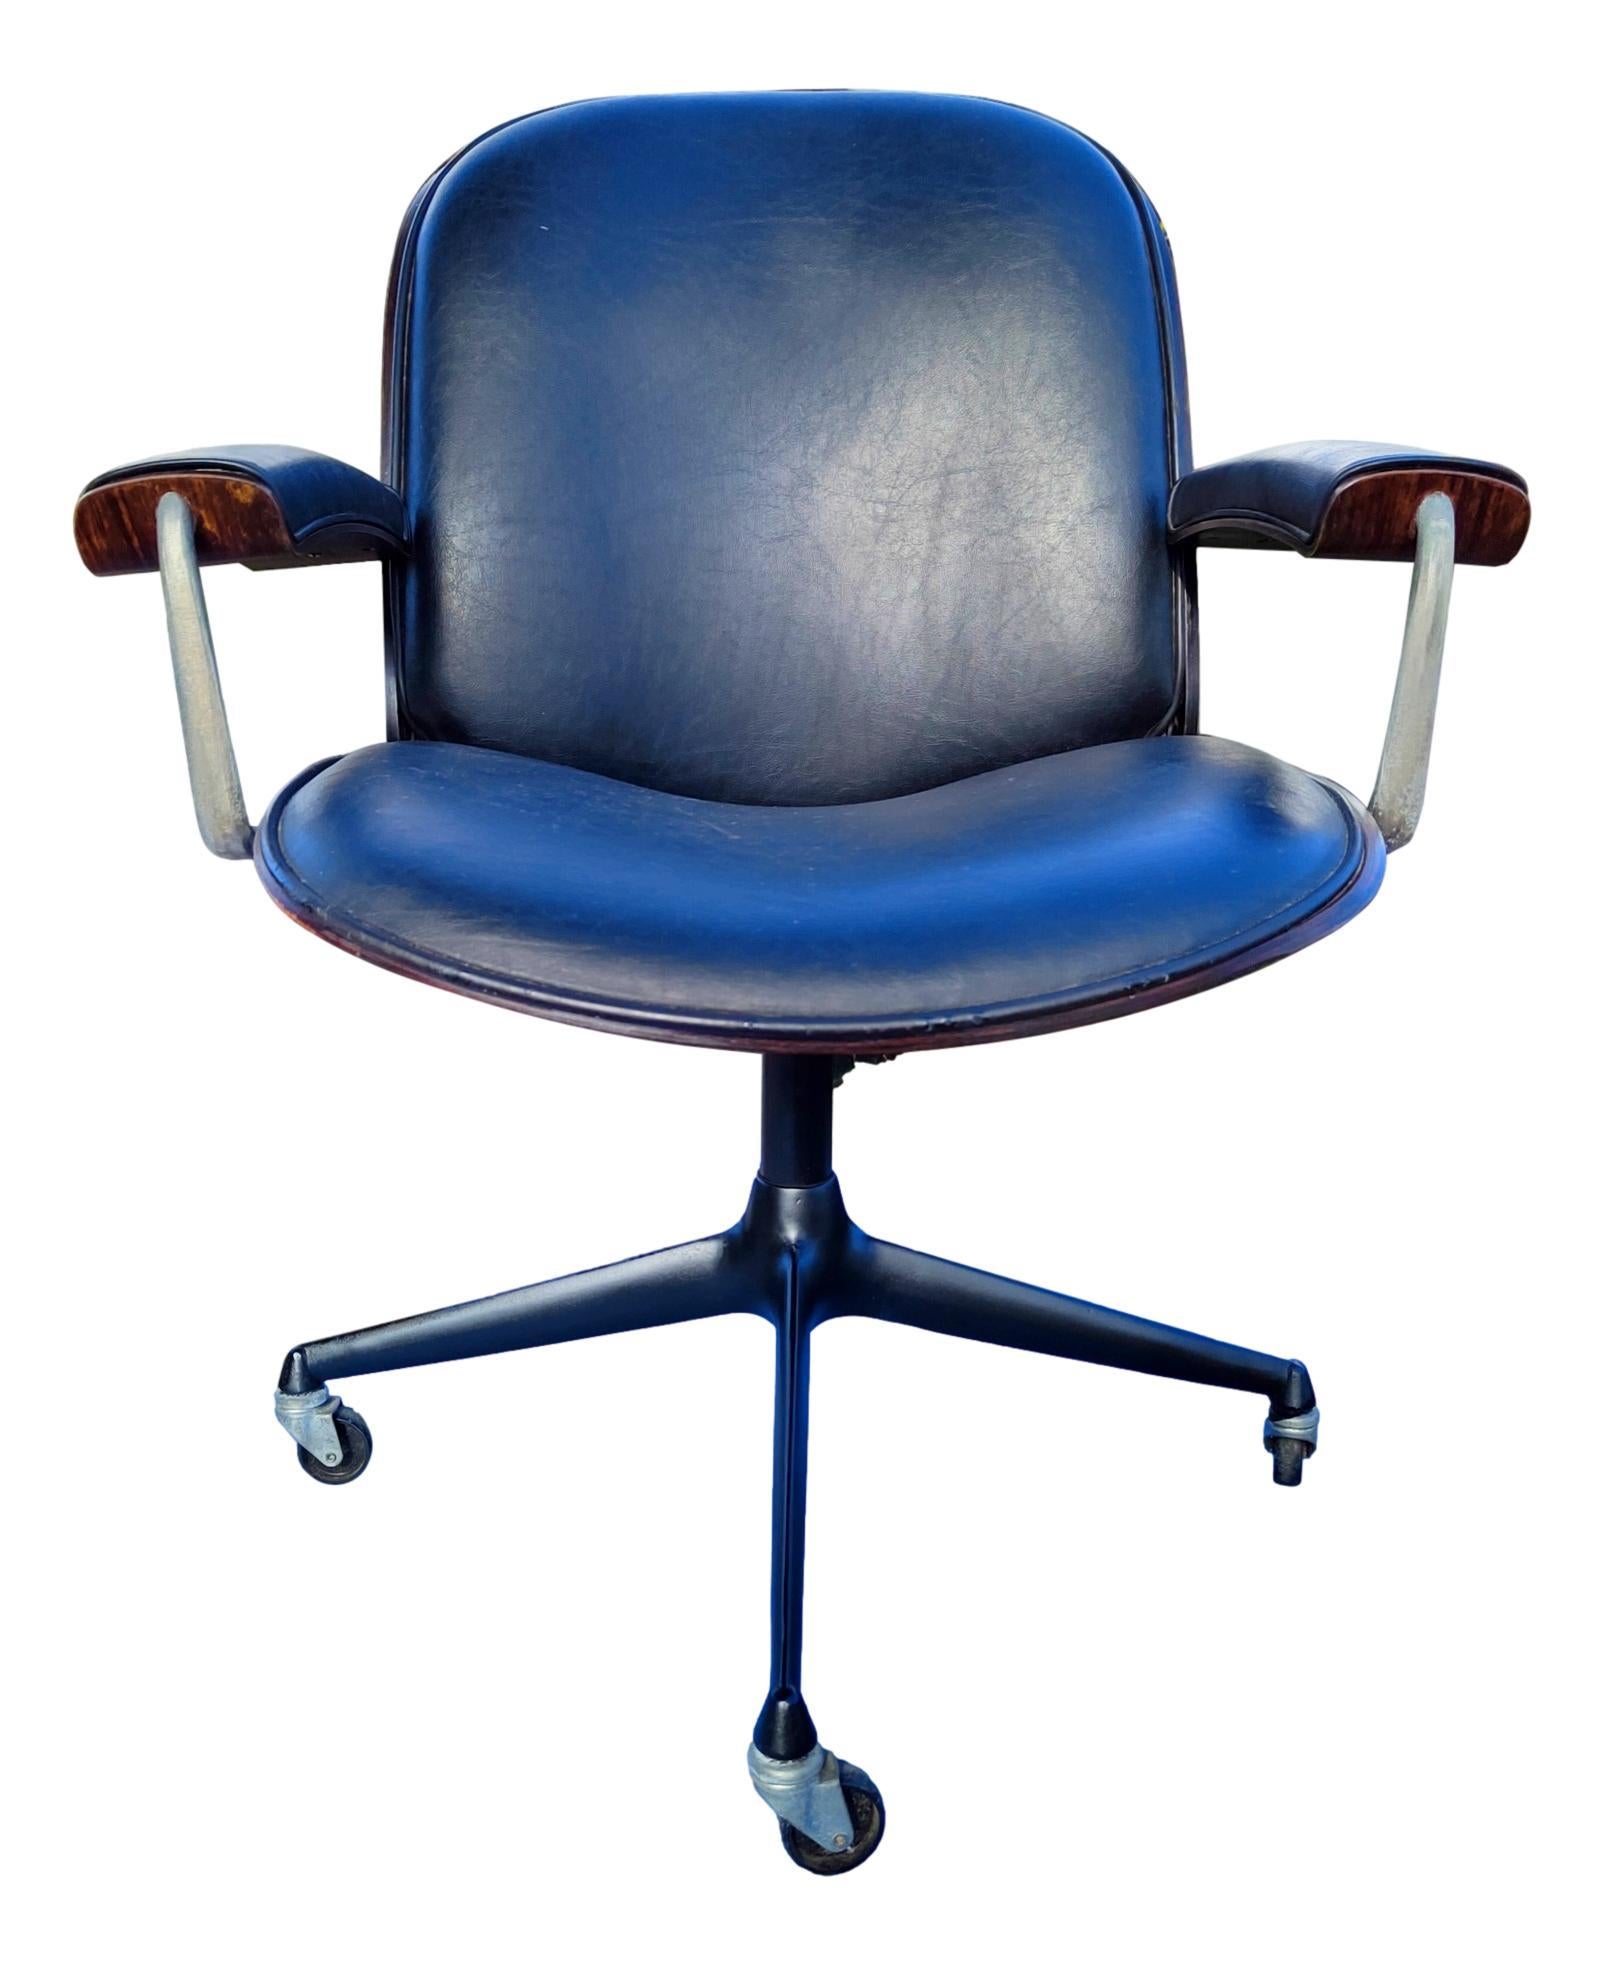 Mid-Century Modern Desk Office Chair Design Ico Parisi for Mim Roma 1960